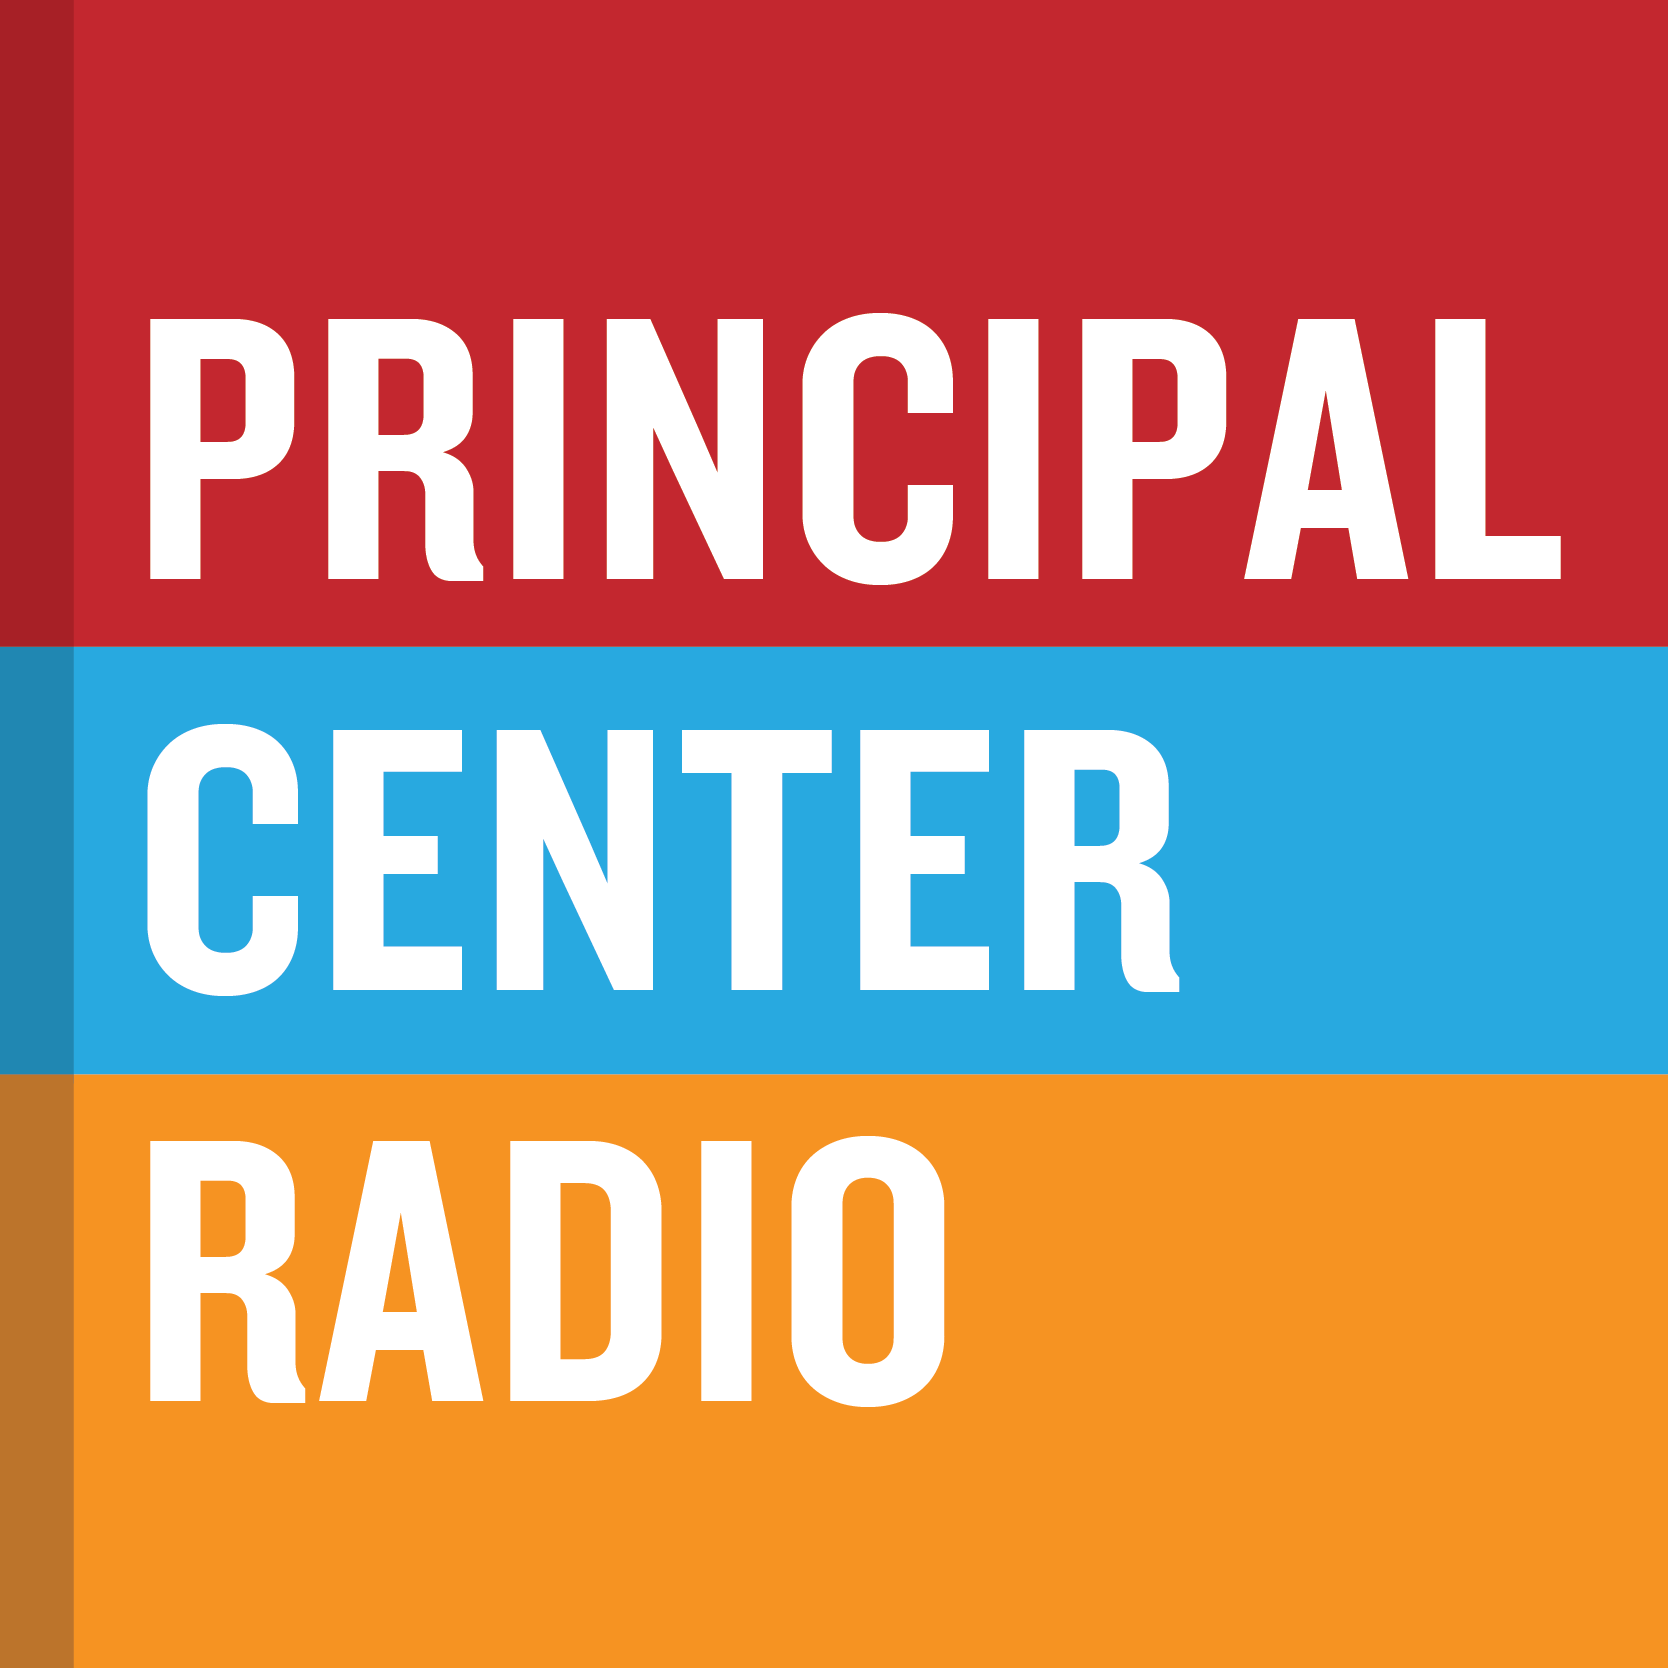 Principal Center Radio